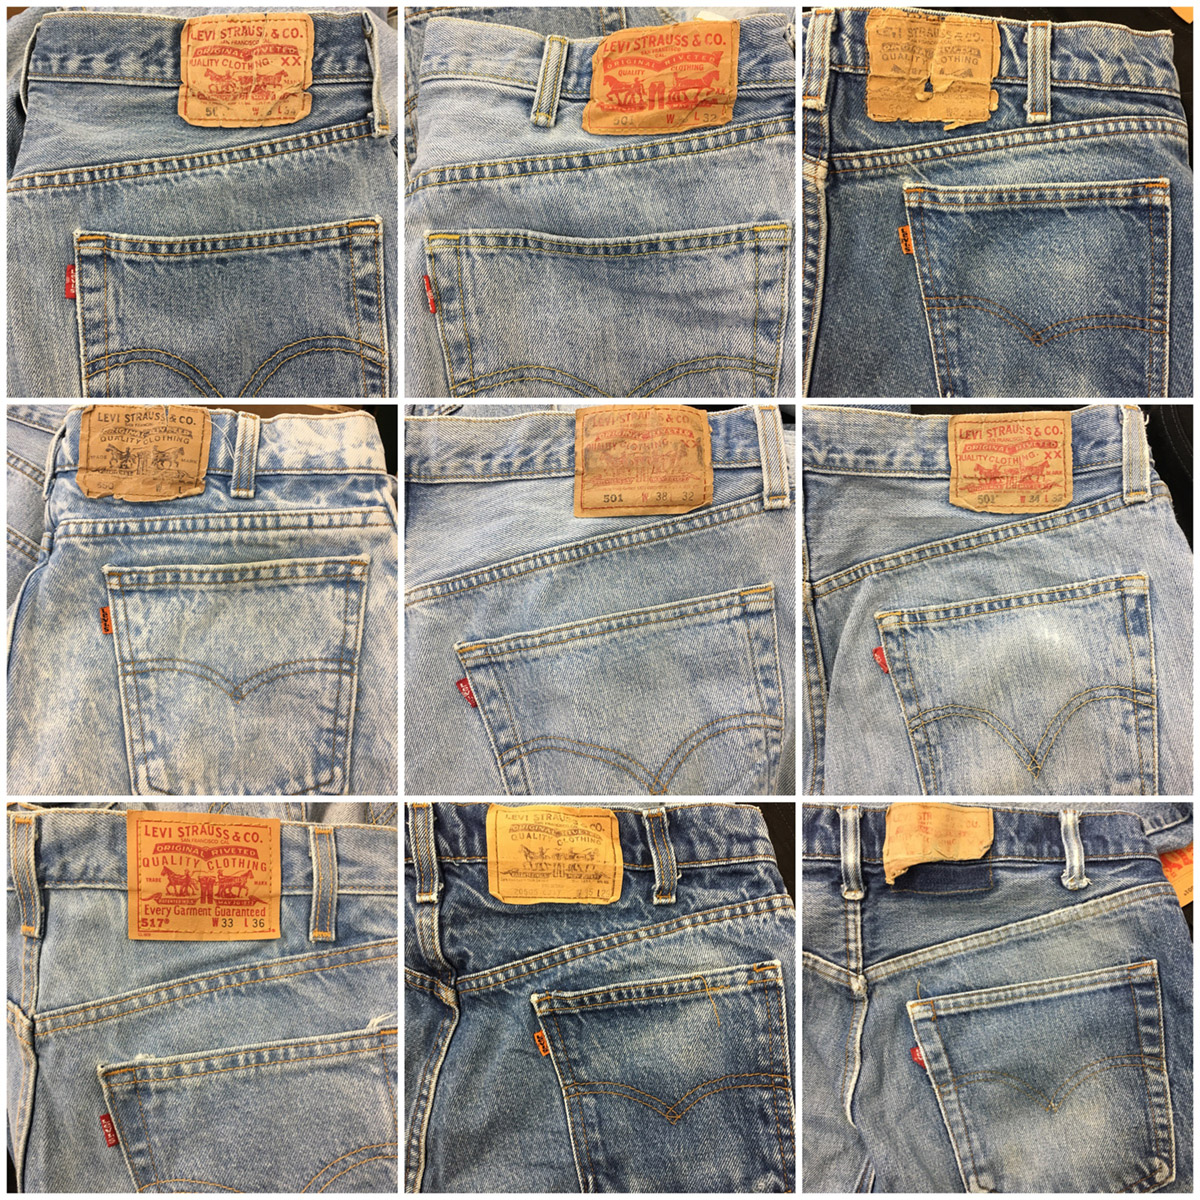 Levis Jeans by the pound: Bulk Vintage 